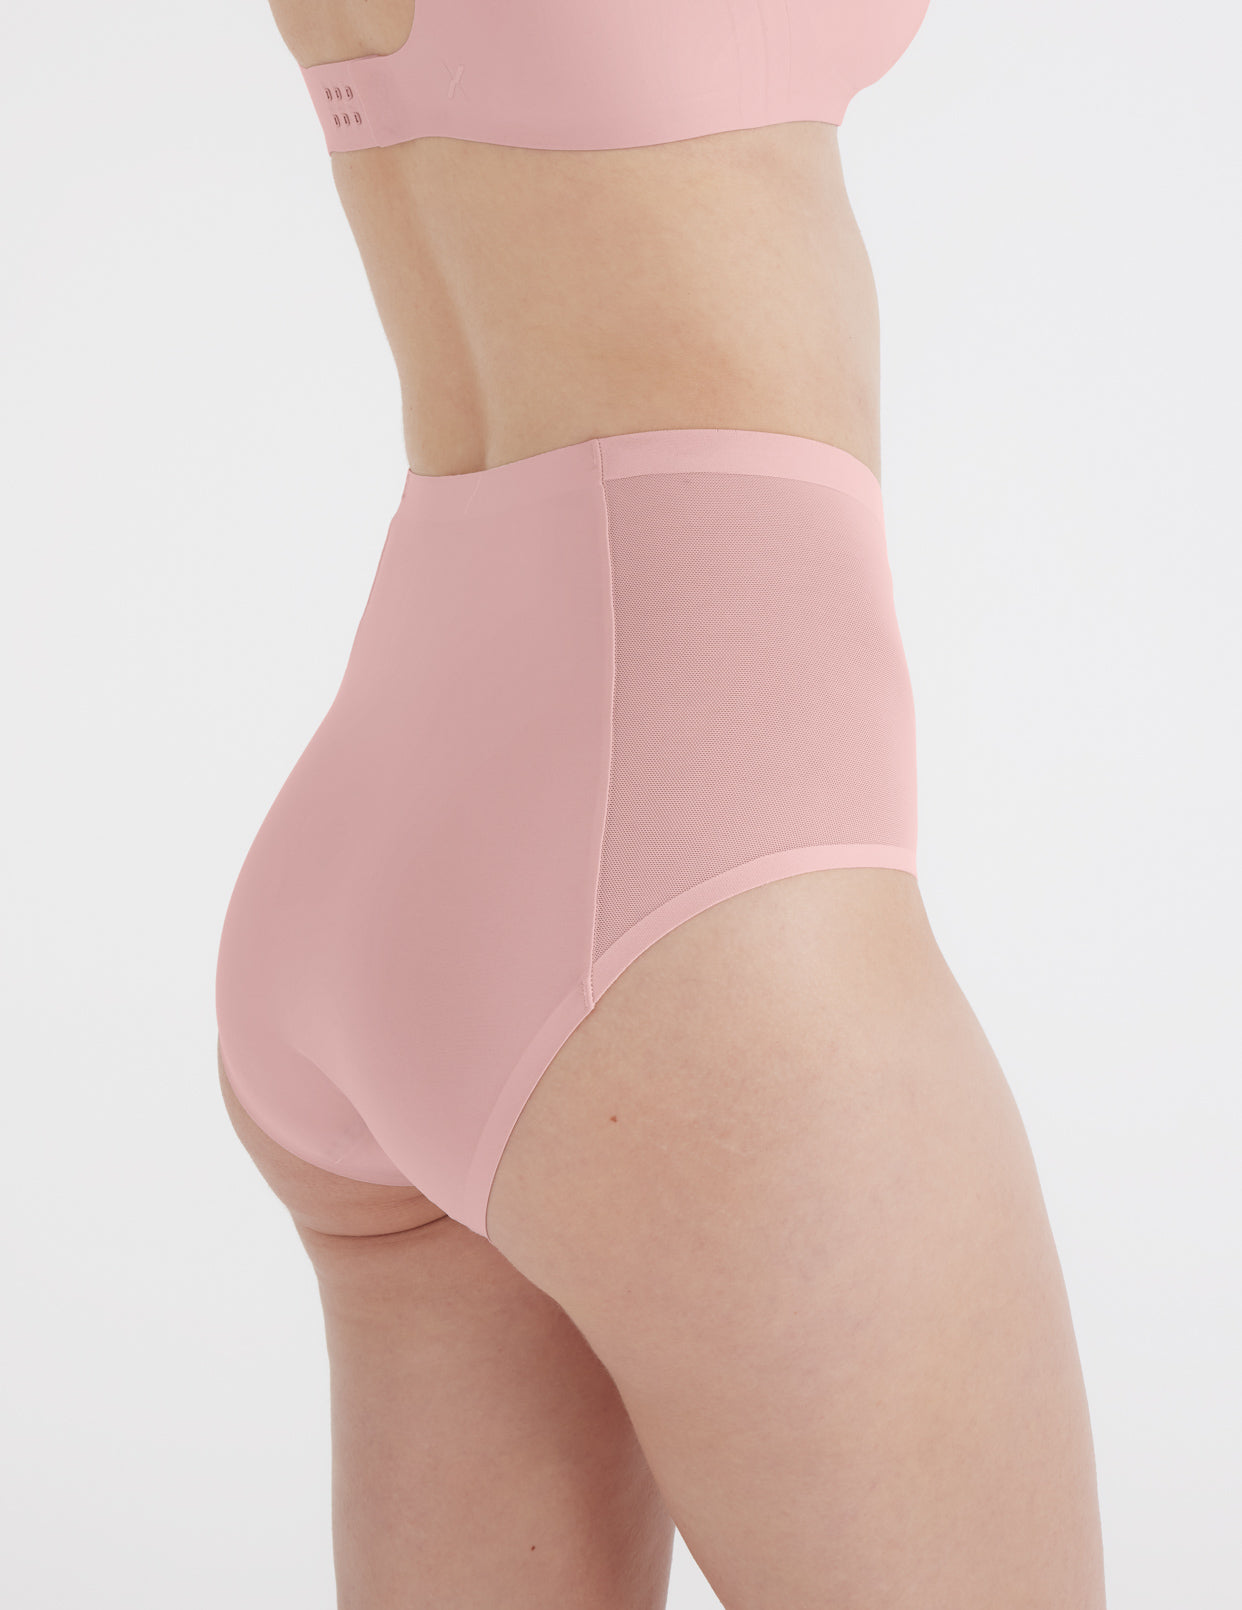 Leak Proof Underwear for Urine #incontinence #urineleakage  #incontinenceunderwear 